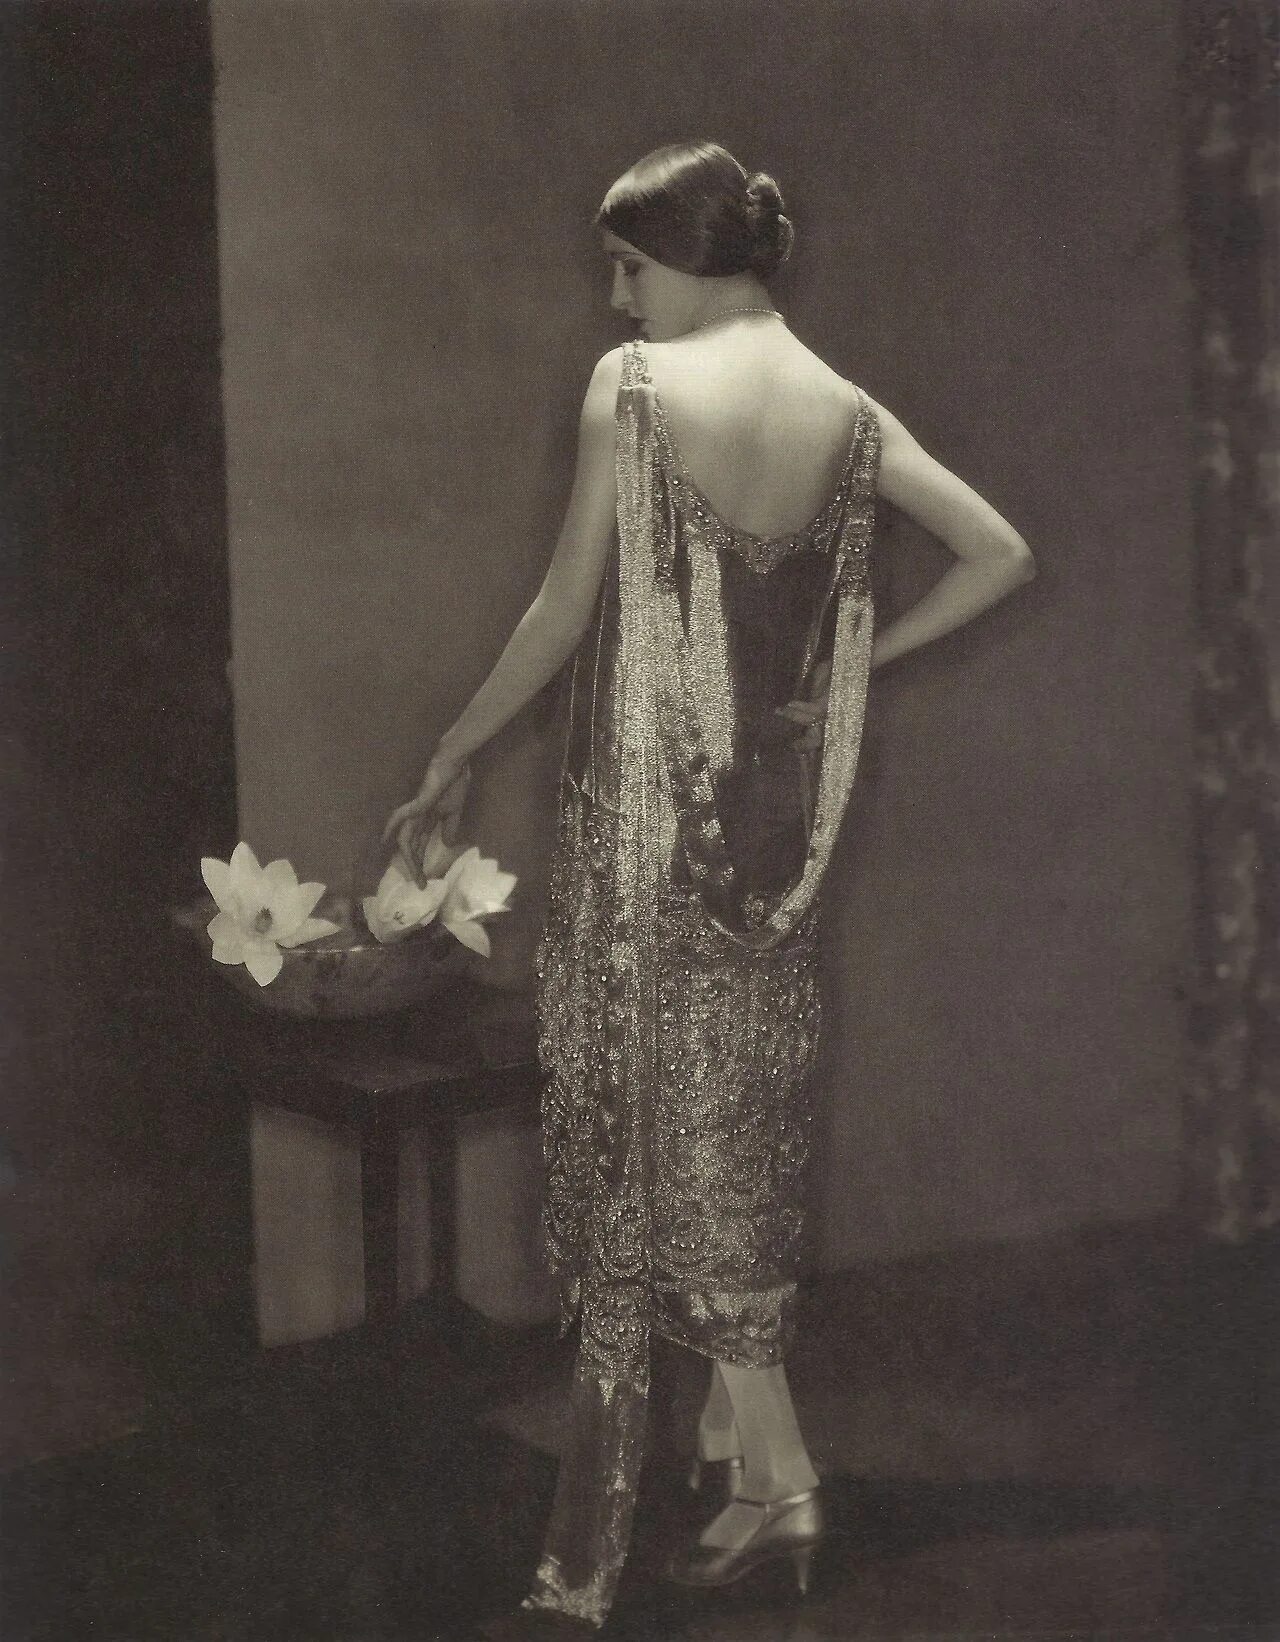 Мода 20х. Марион Морхаус. Коко Шанель 20е. Платья 1920-х годов Коко Шанель.